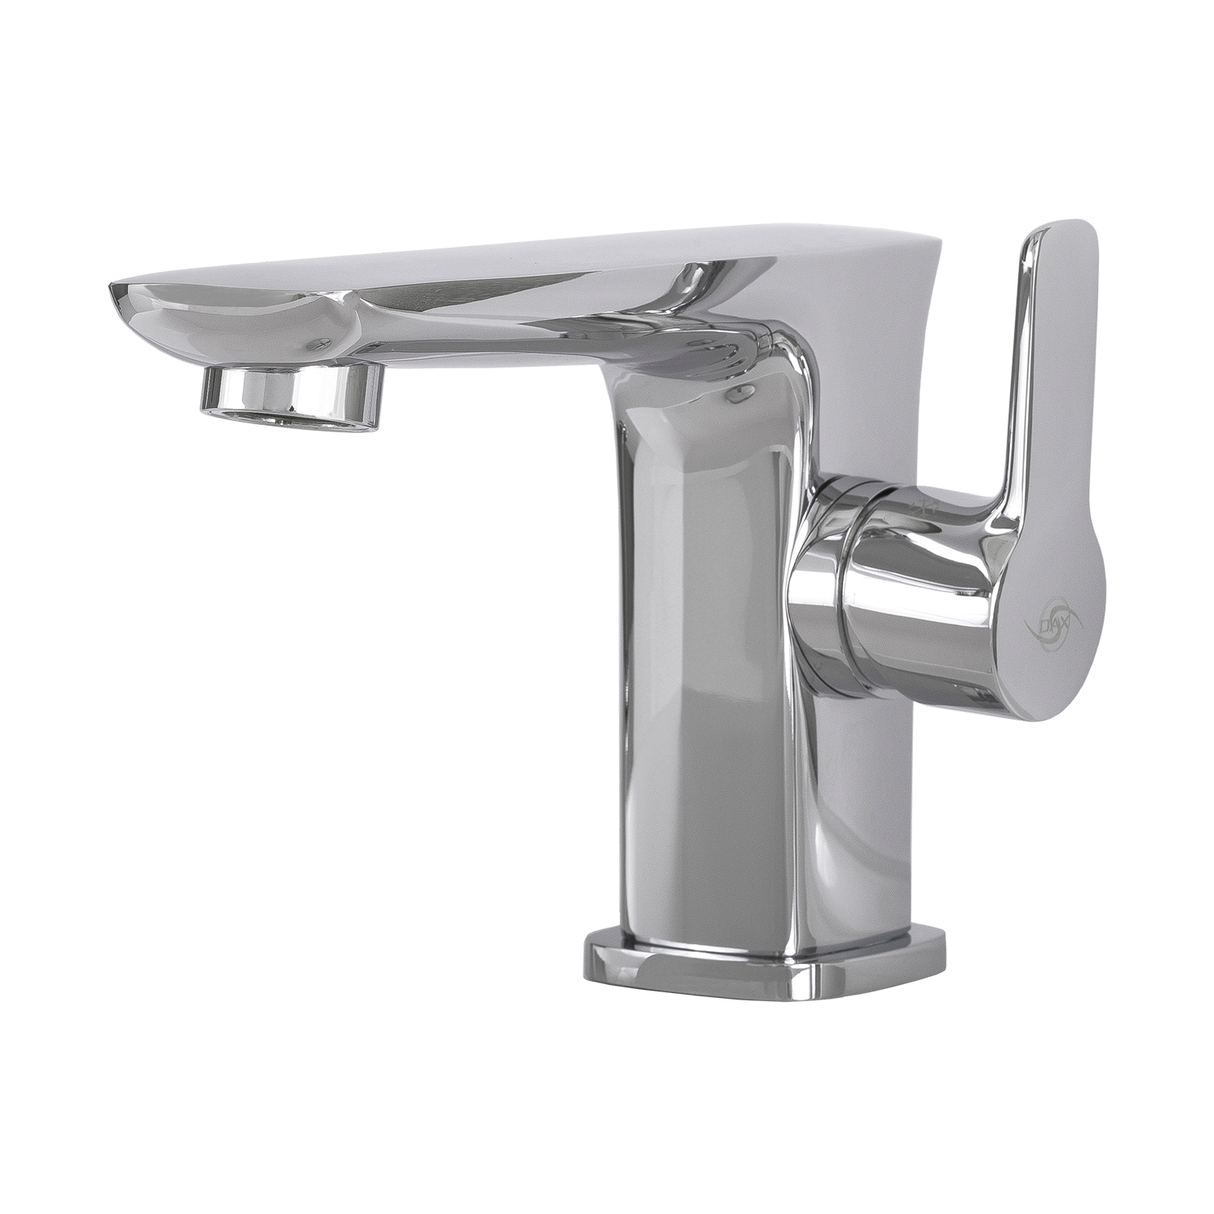 DAX Brass Single Handle Bathroom Faucet, Chrome DAX-9883